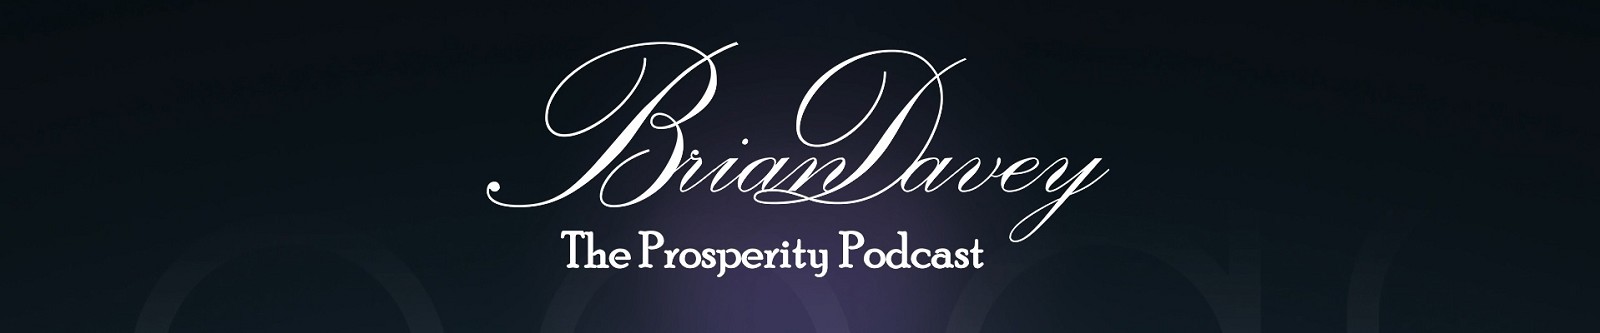 prosperity-podcast-image001